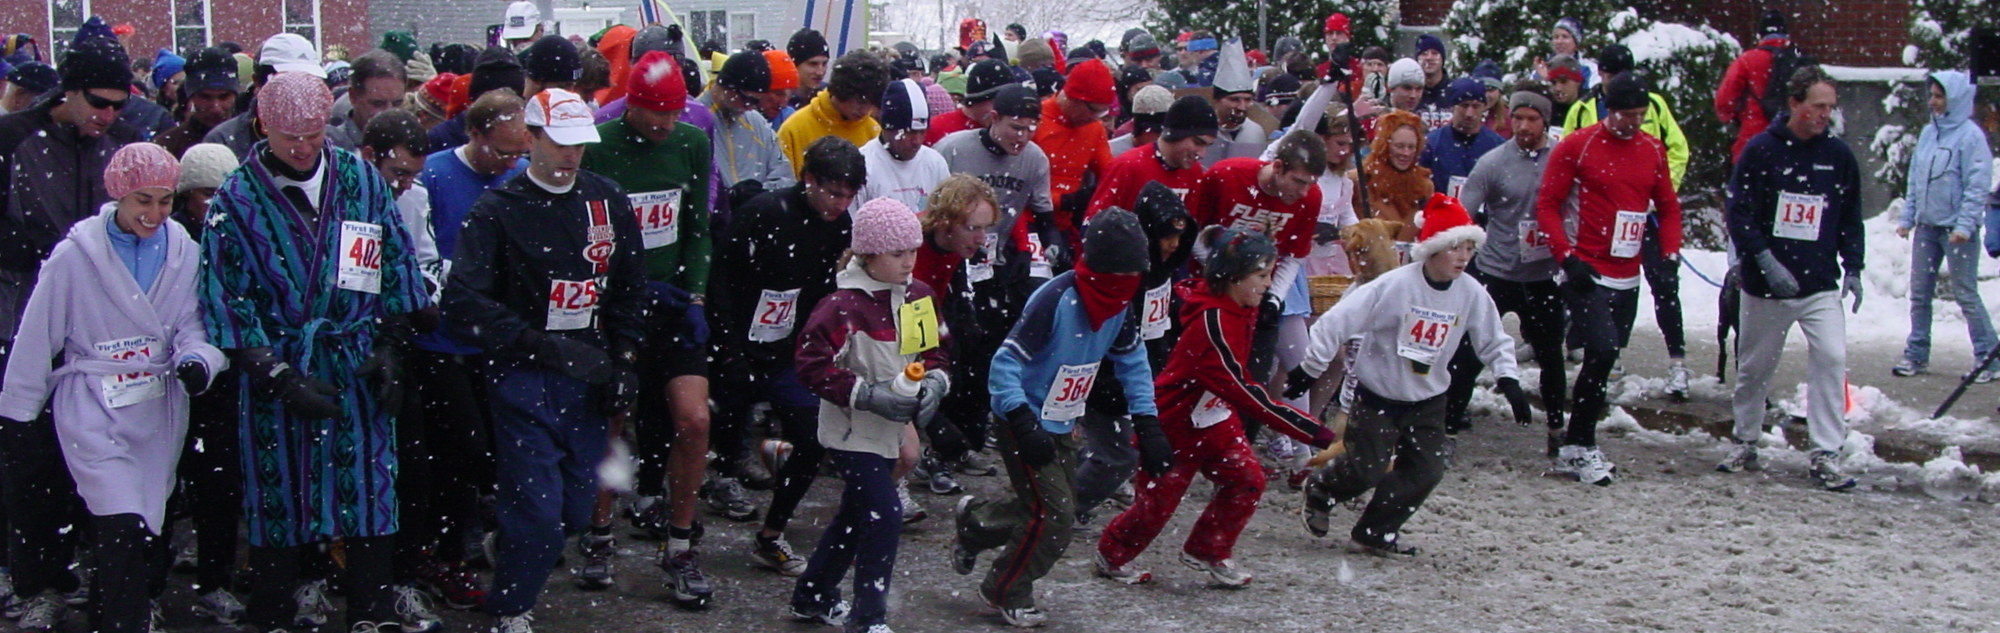 Winter race image